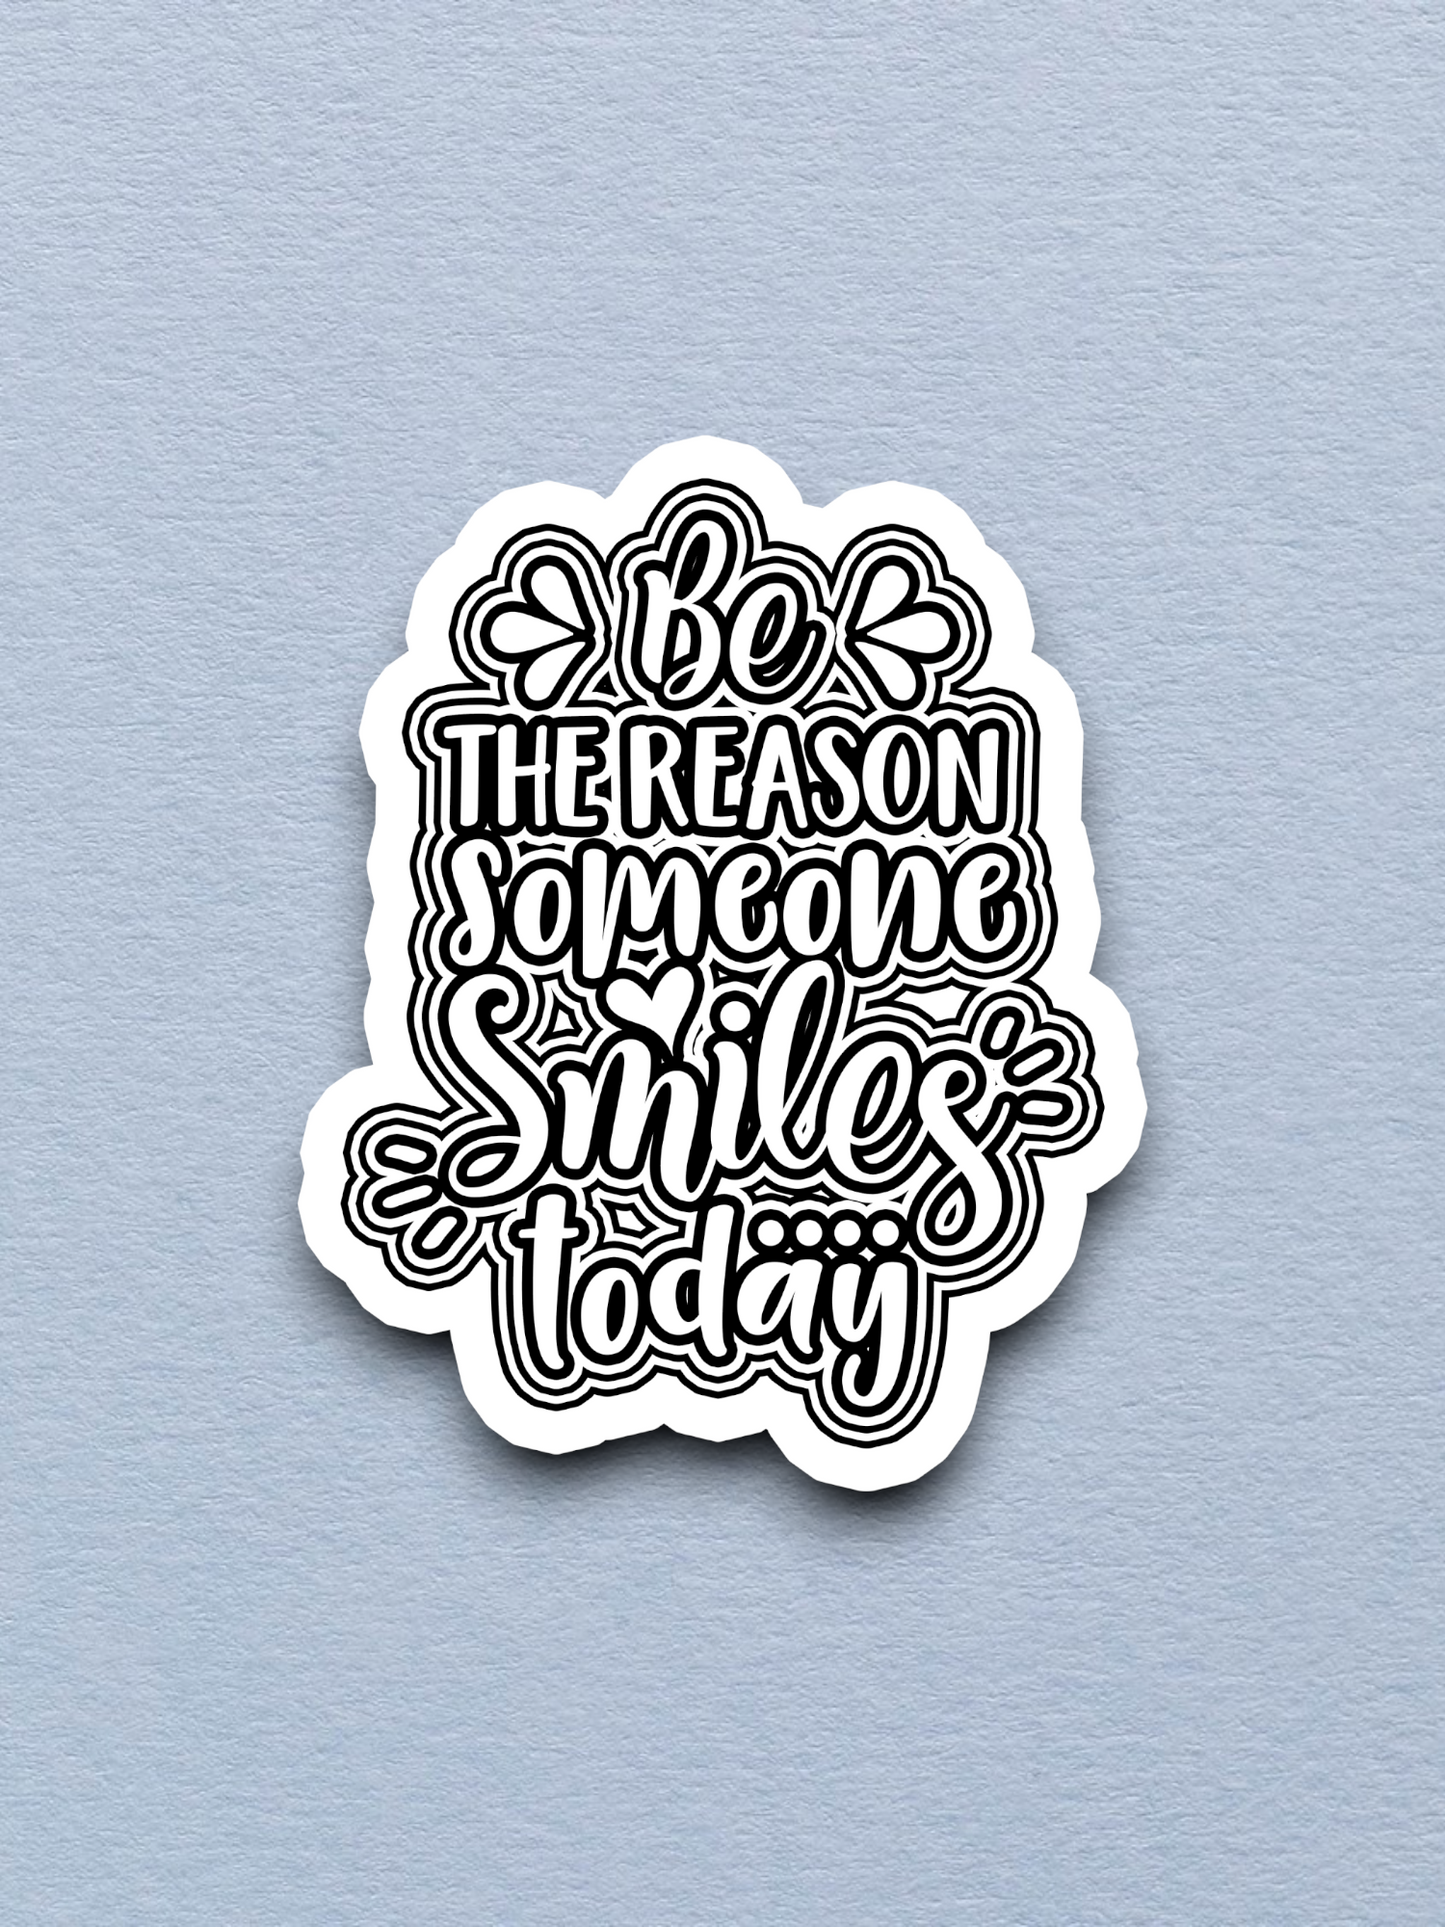 Be the Reason Someone Smiles Today - Faith Sticker